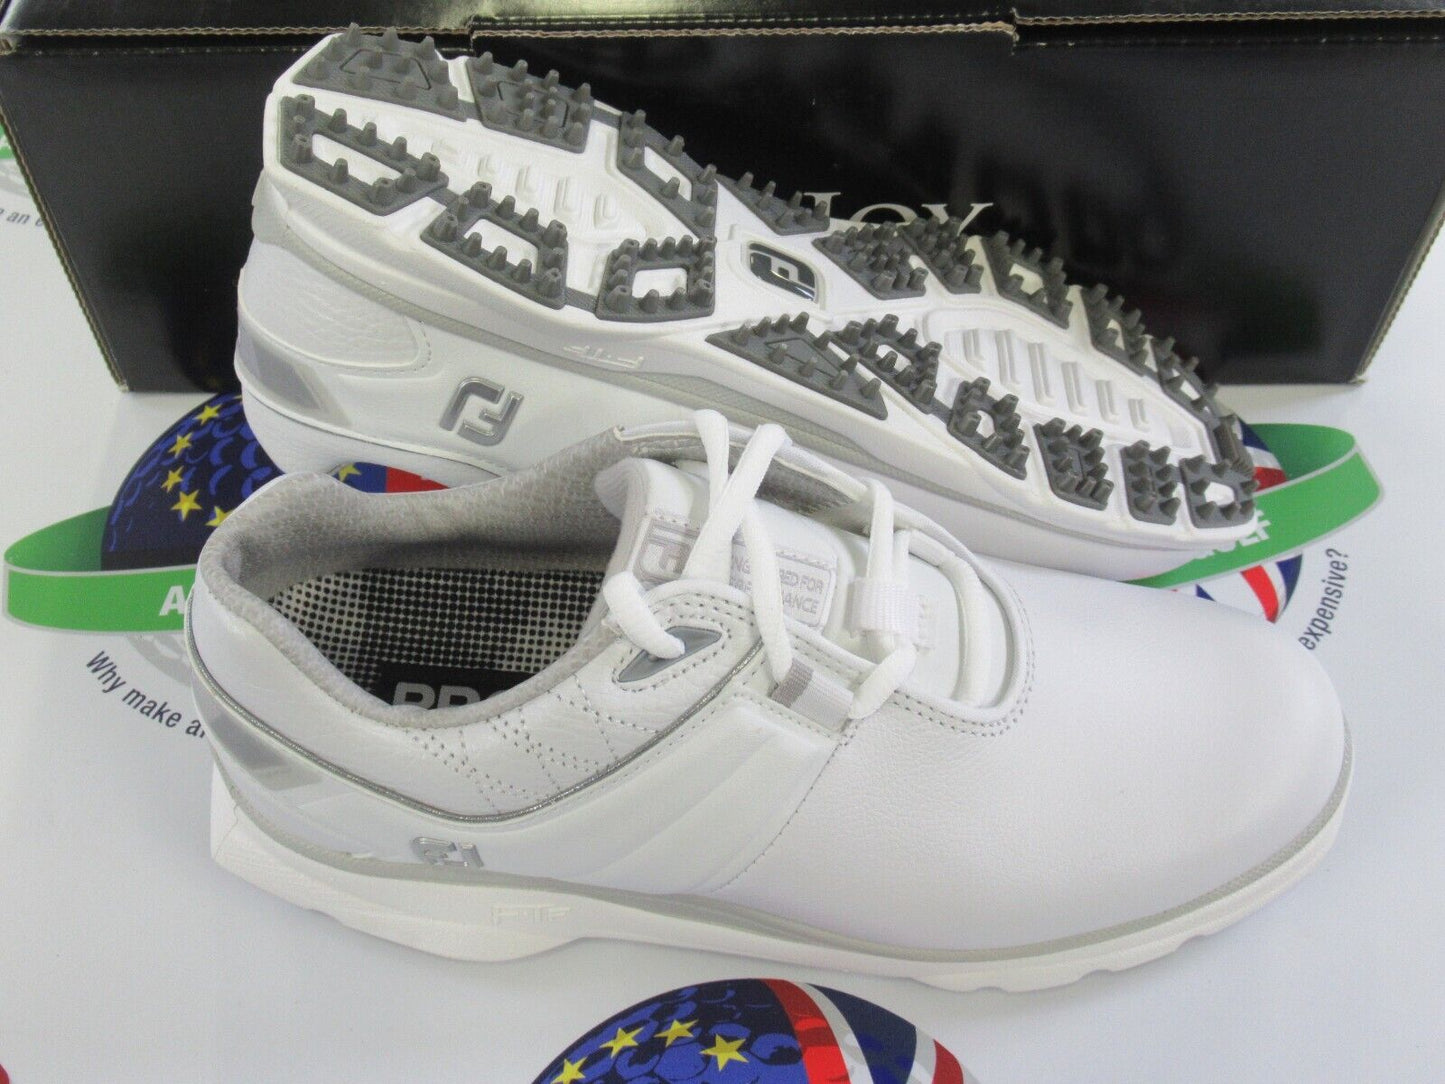 footjoy pro sl womens golf shoes white/silver uk size 4.5 medium